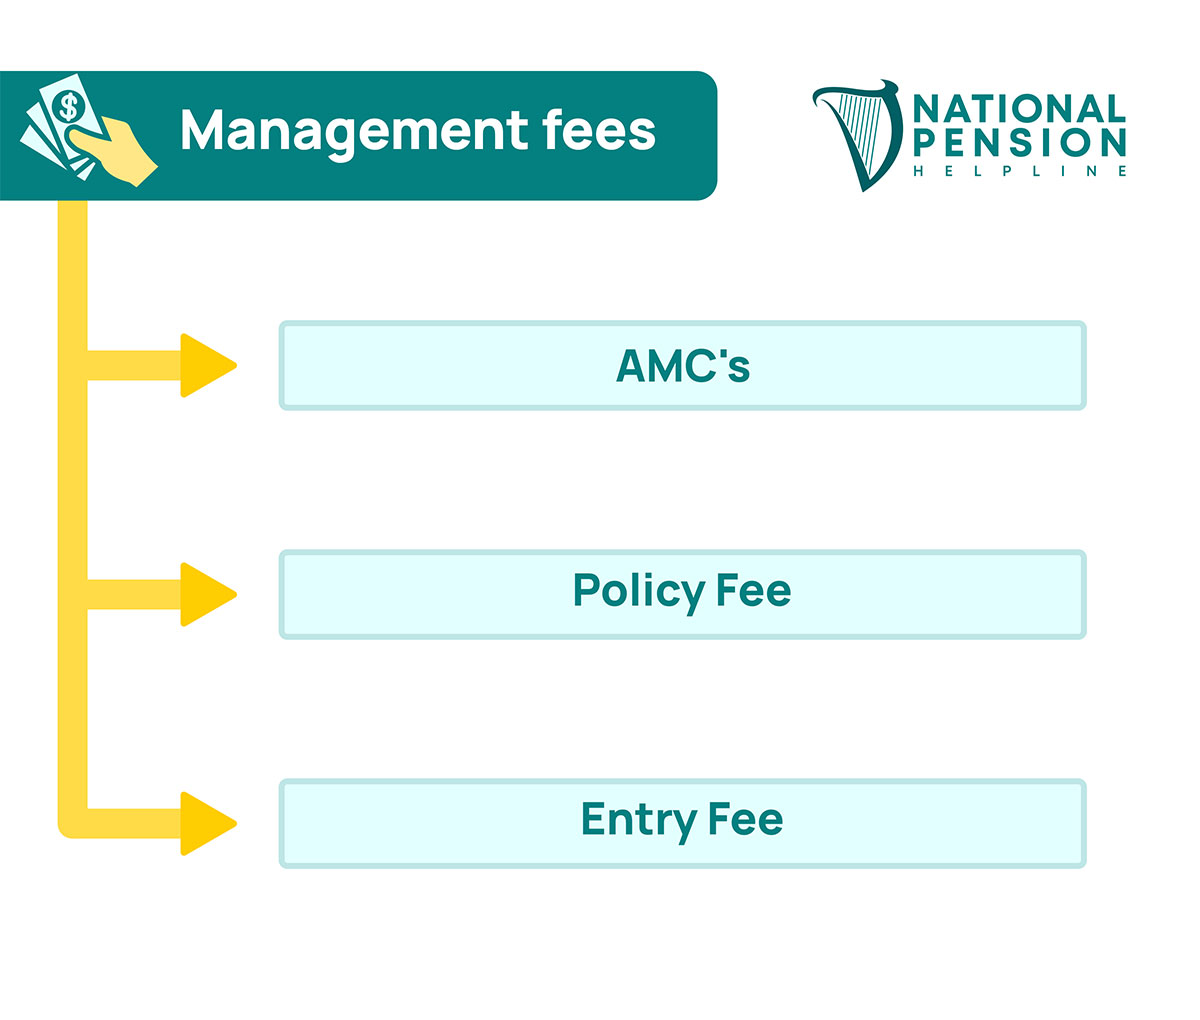 Major pension management fees